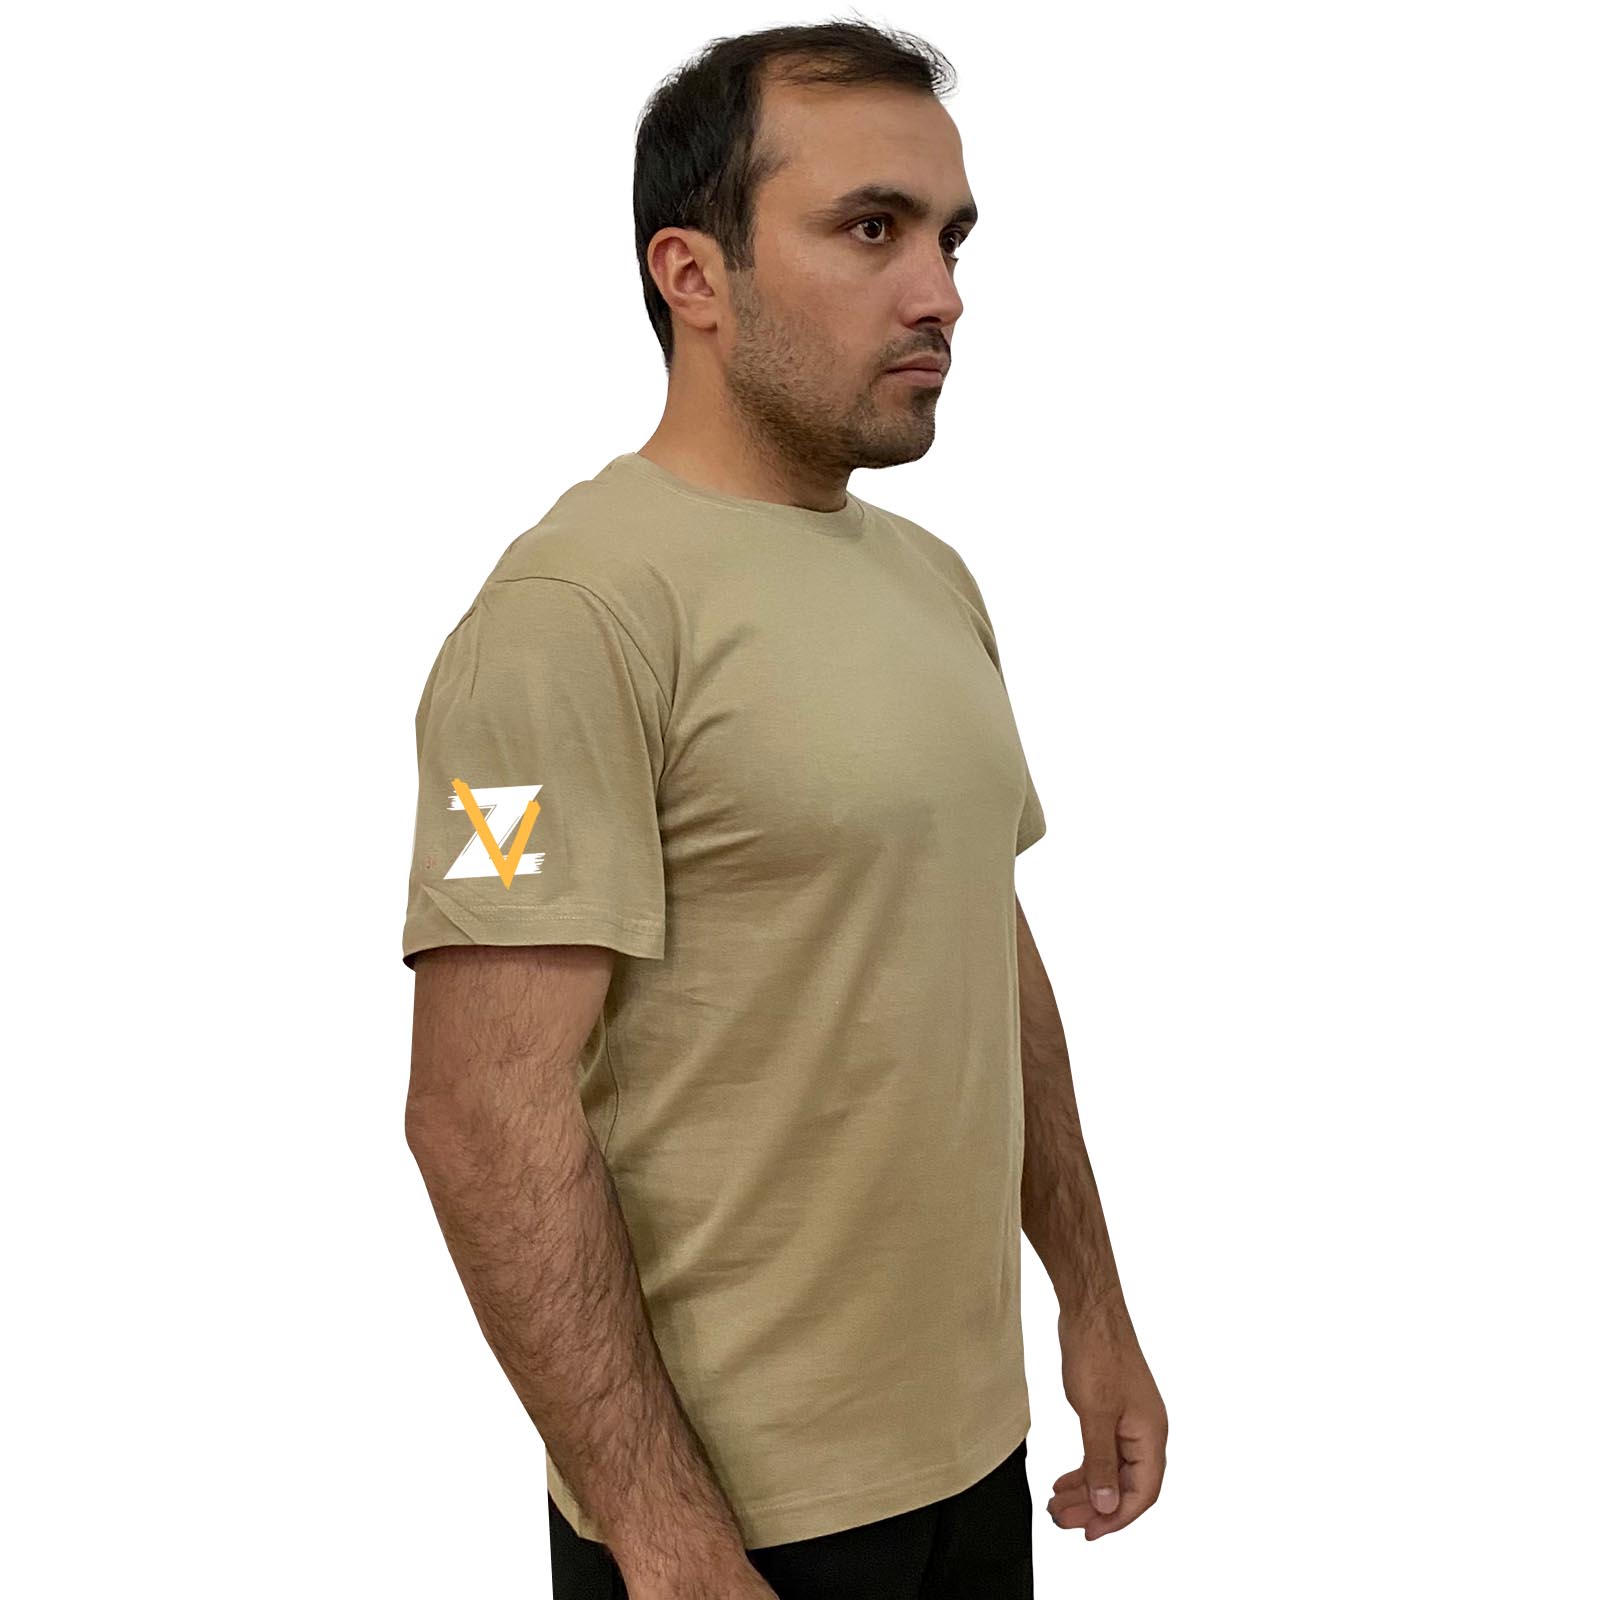 Купить трикотажную мужскую футболку Z V онлайн